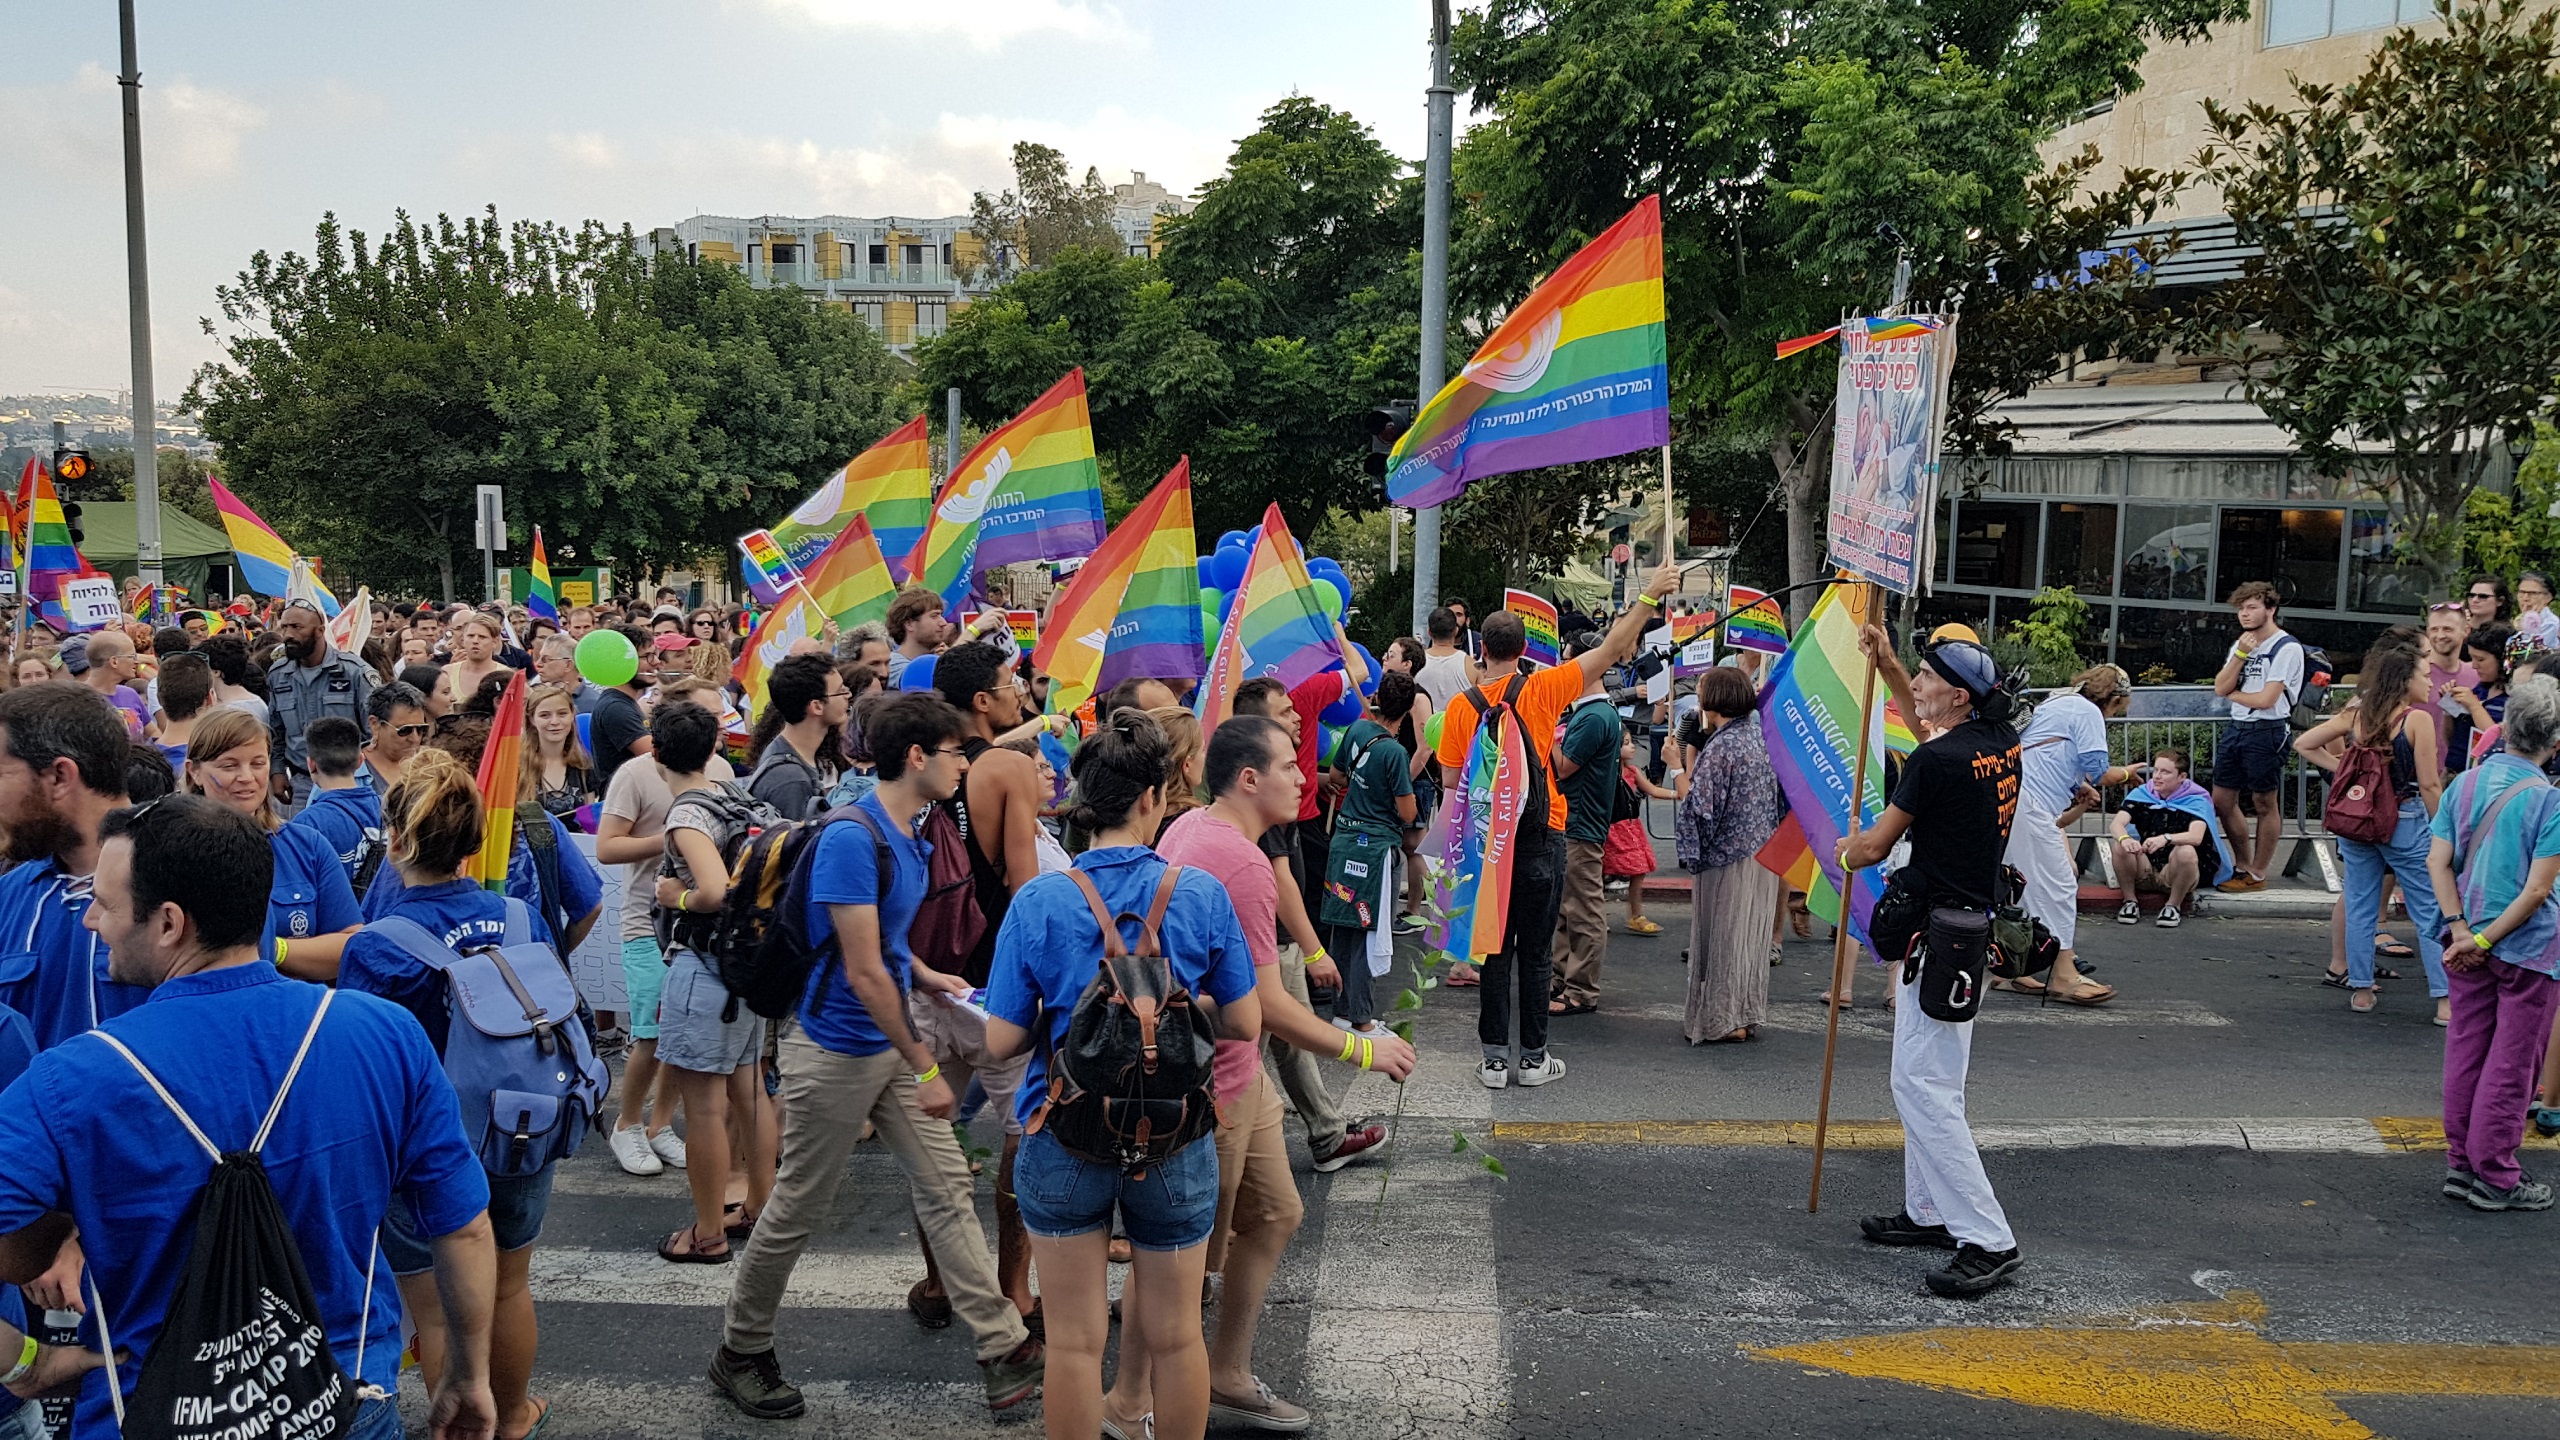 Jerusalem Hosts Gay Pride Parade After Year Off for Coronavirus